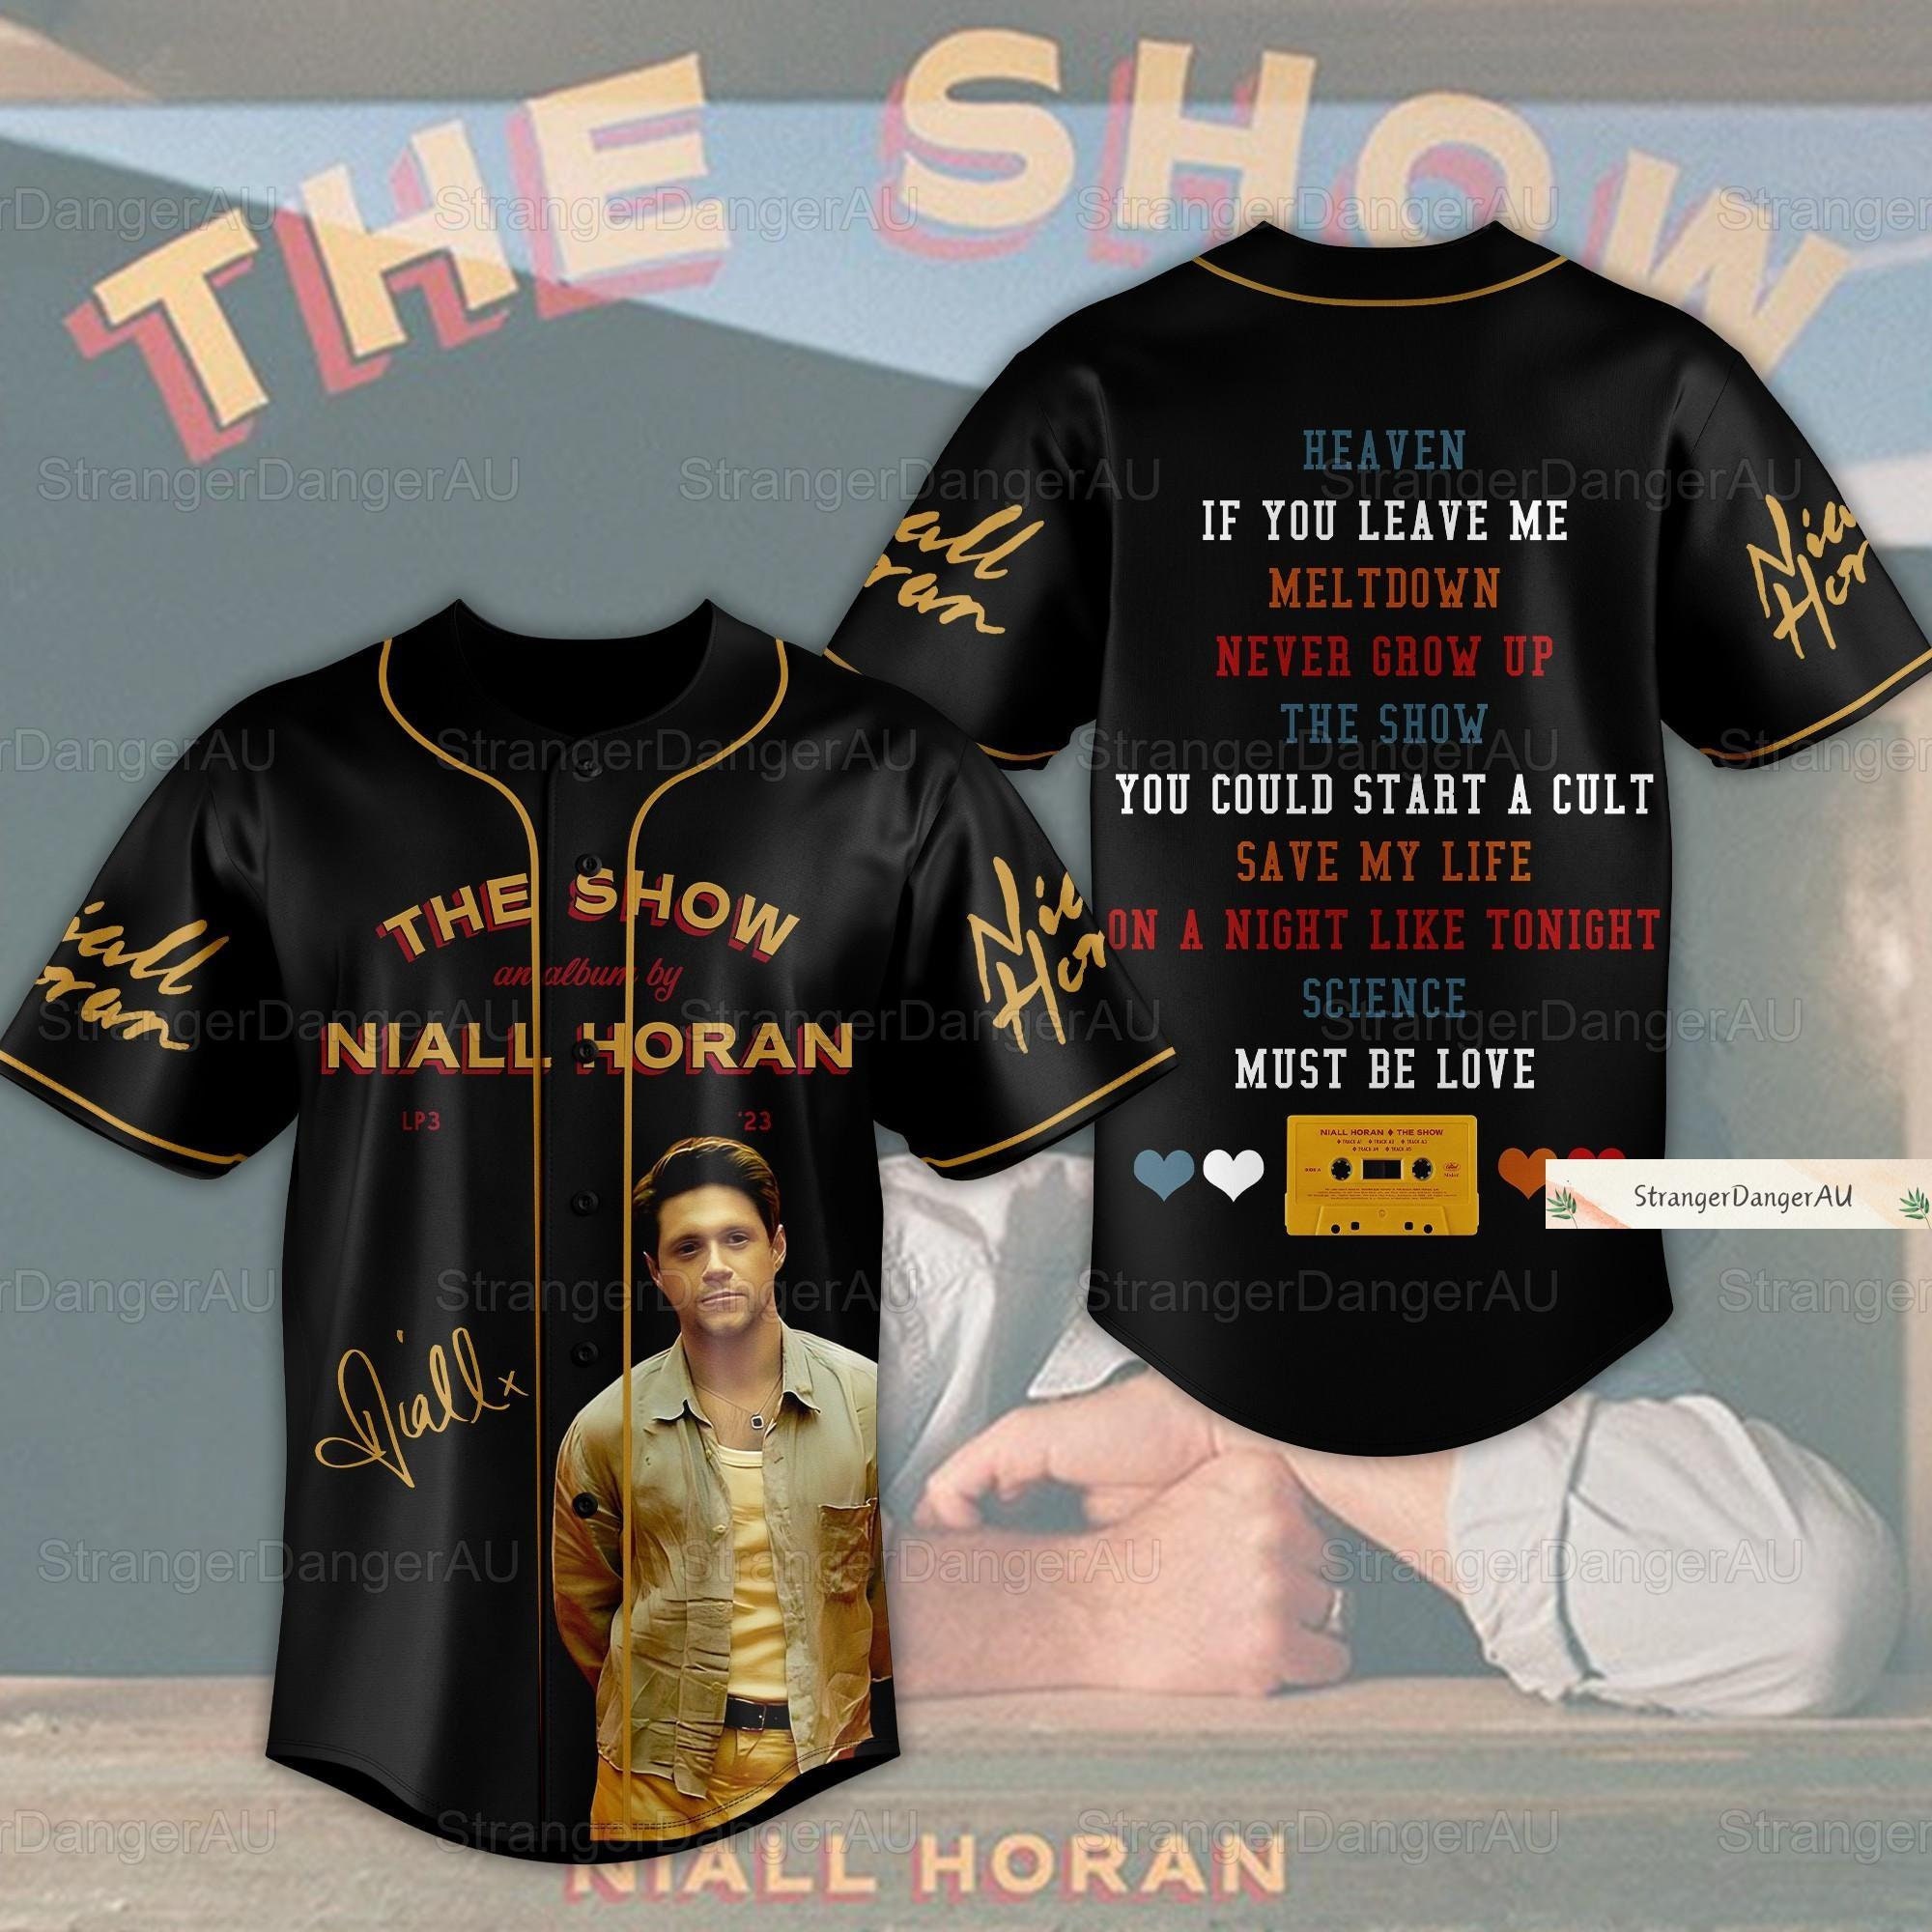 Niall Horan Baseball Jersey, Niall Horan The Show Jersey Shirt